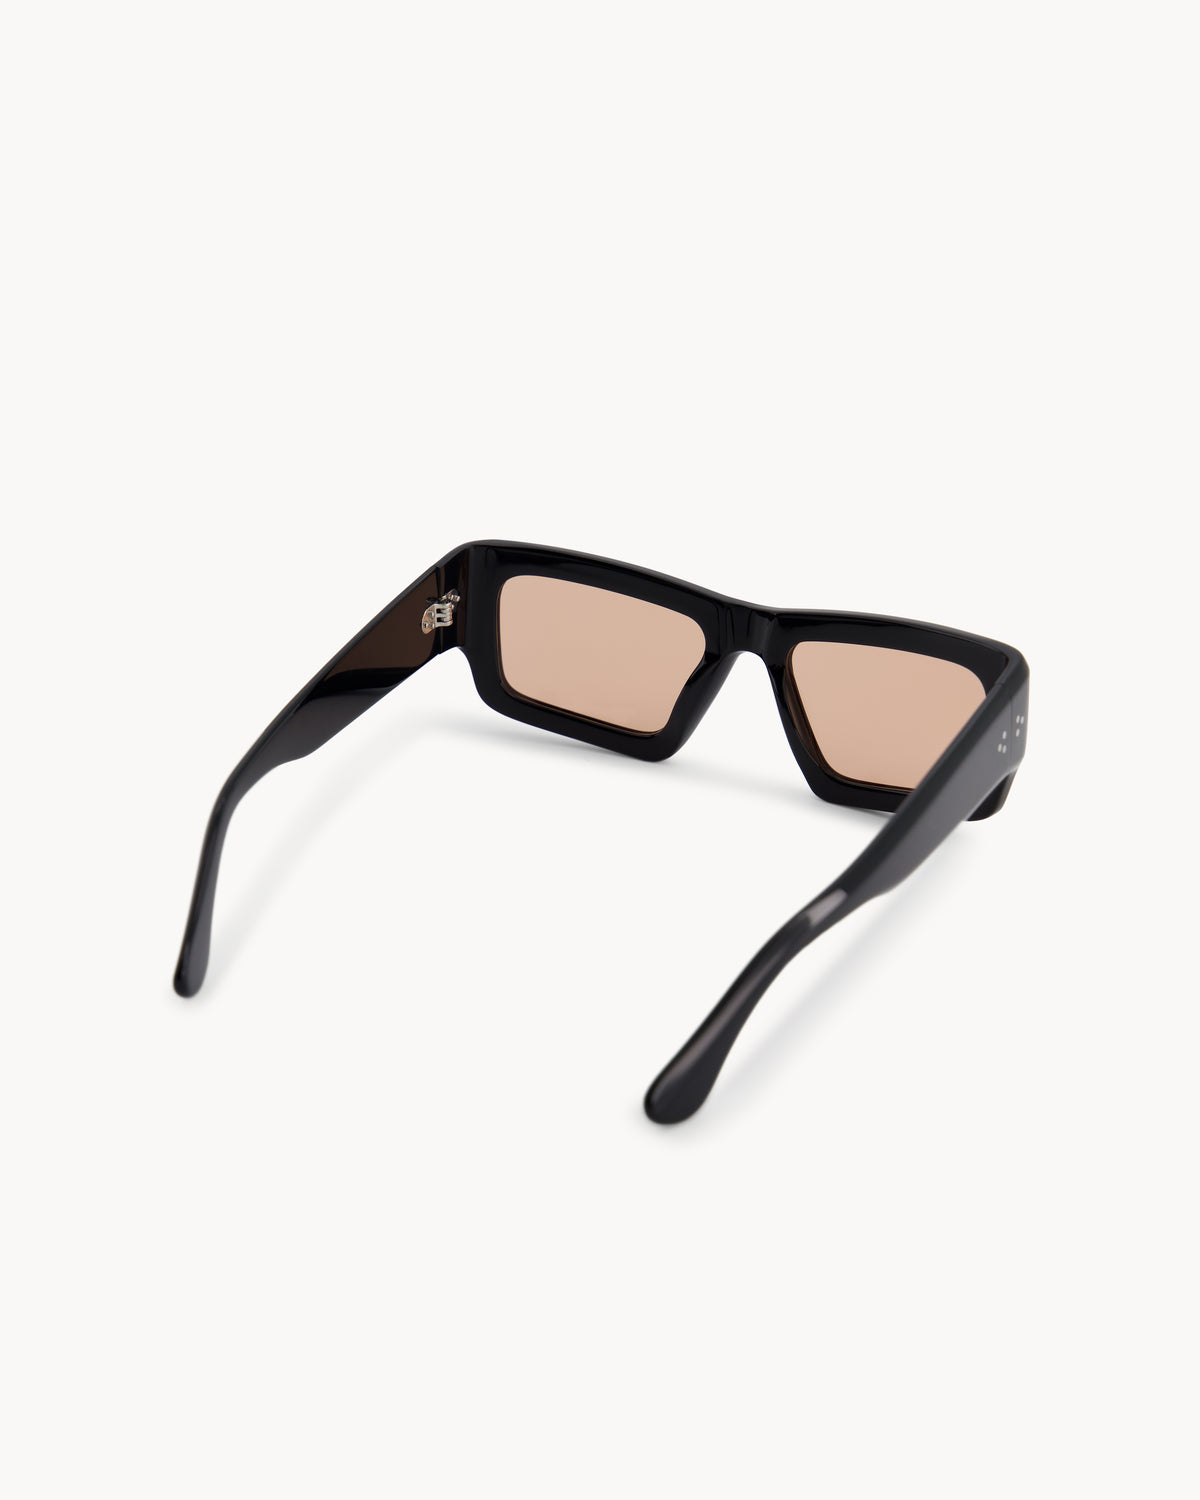 Port Tanger Sabea Sunglasses in Black Acetate and Amber Lenses 3